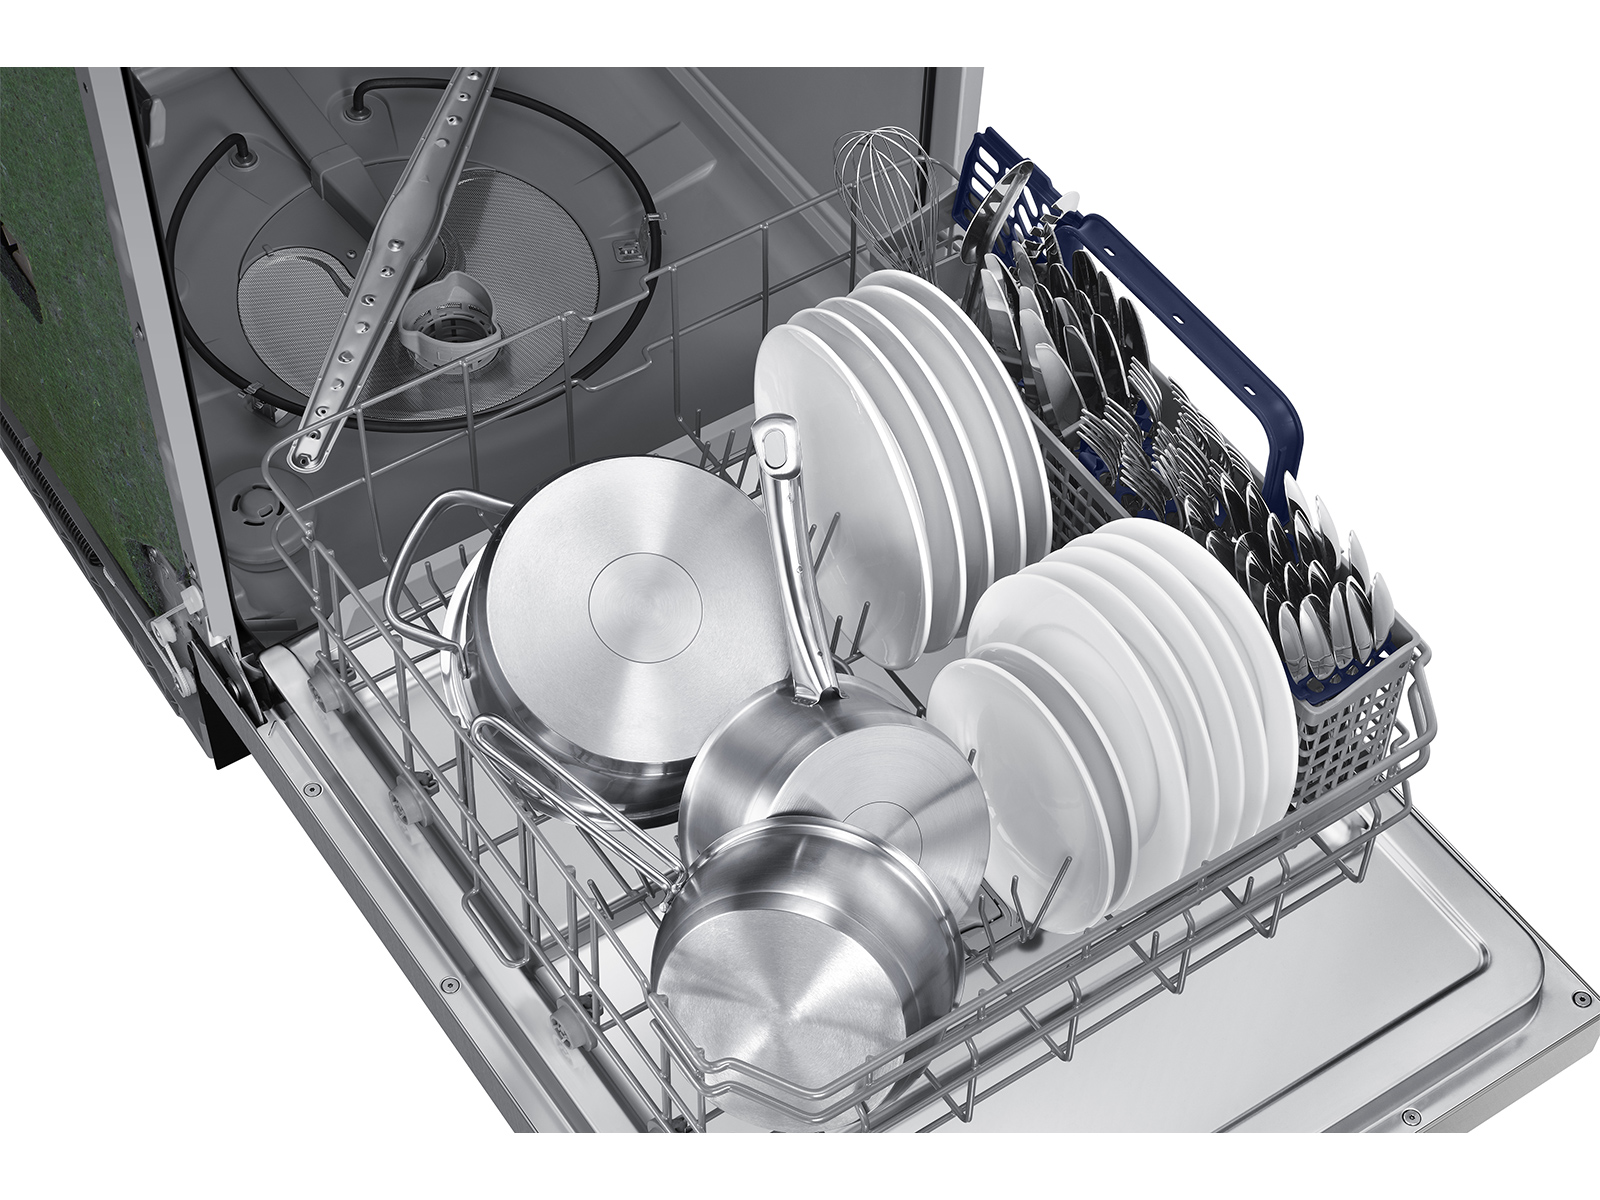 Dishwasher Racks - Contacto Ltd - Professional Catering Utensils